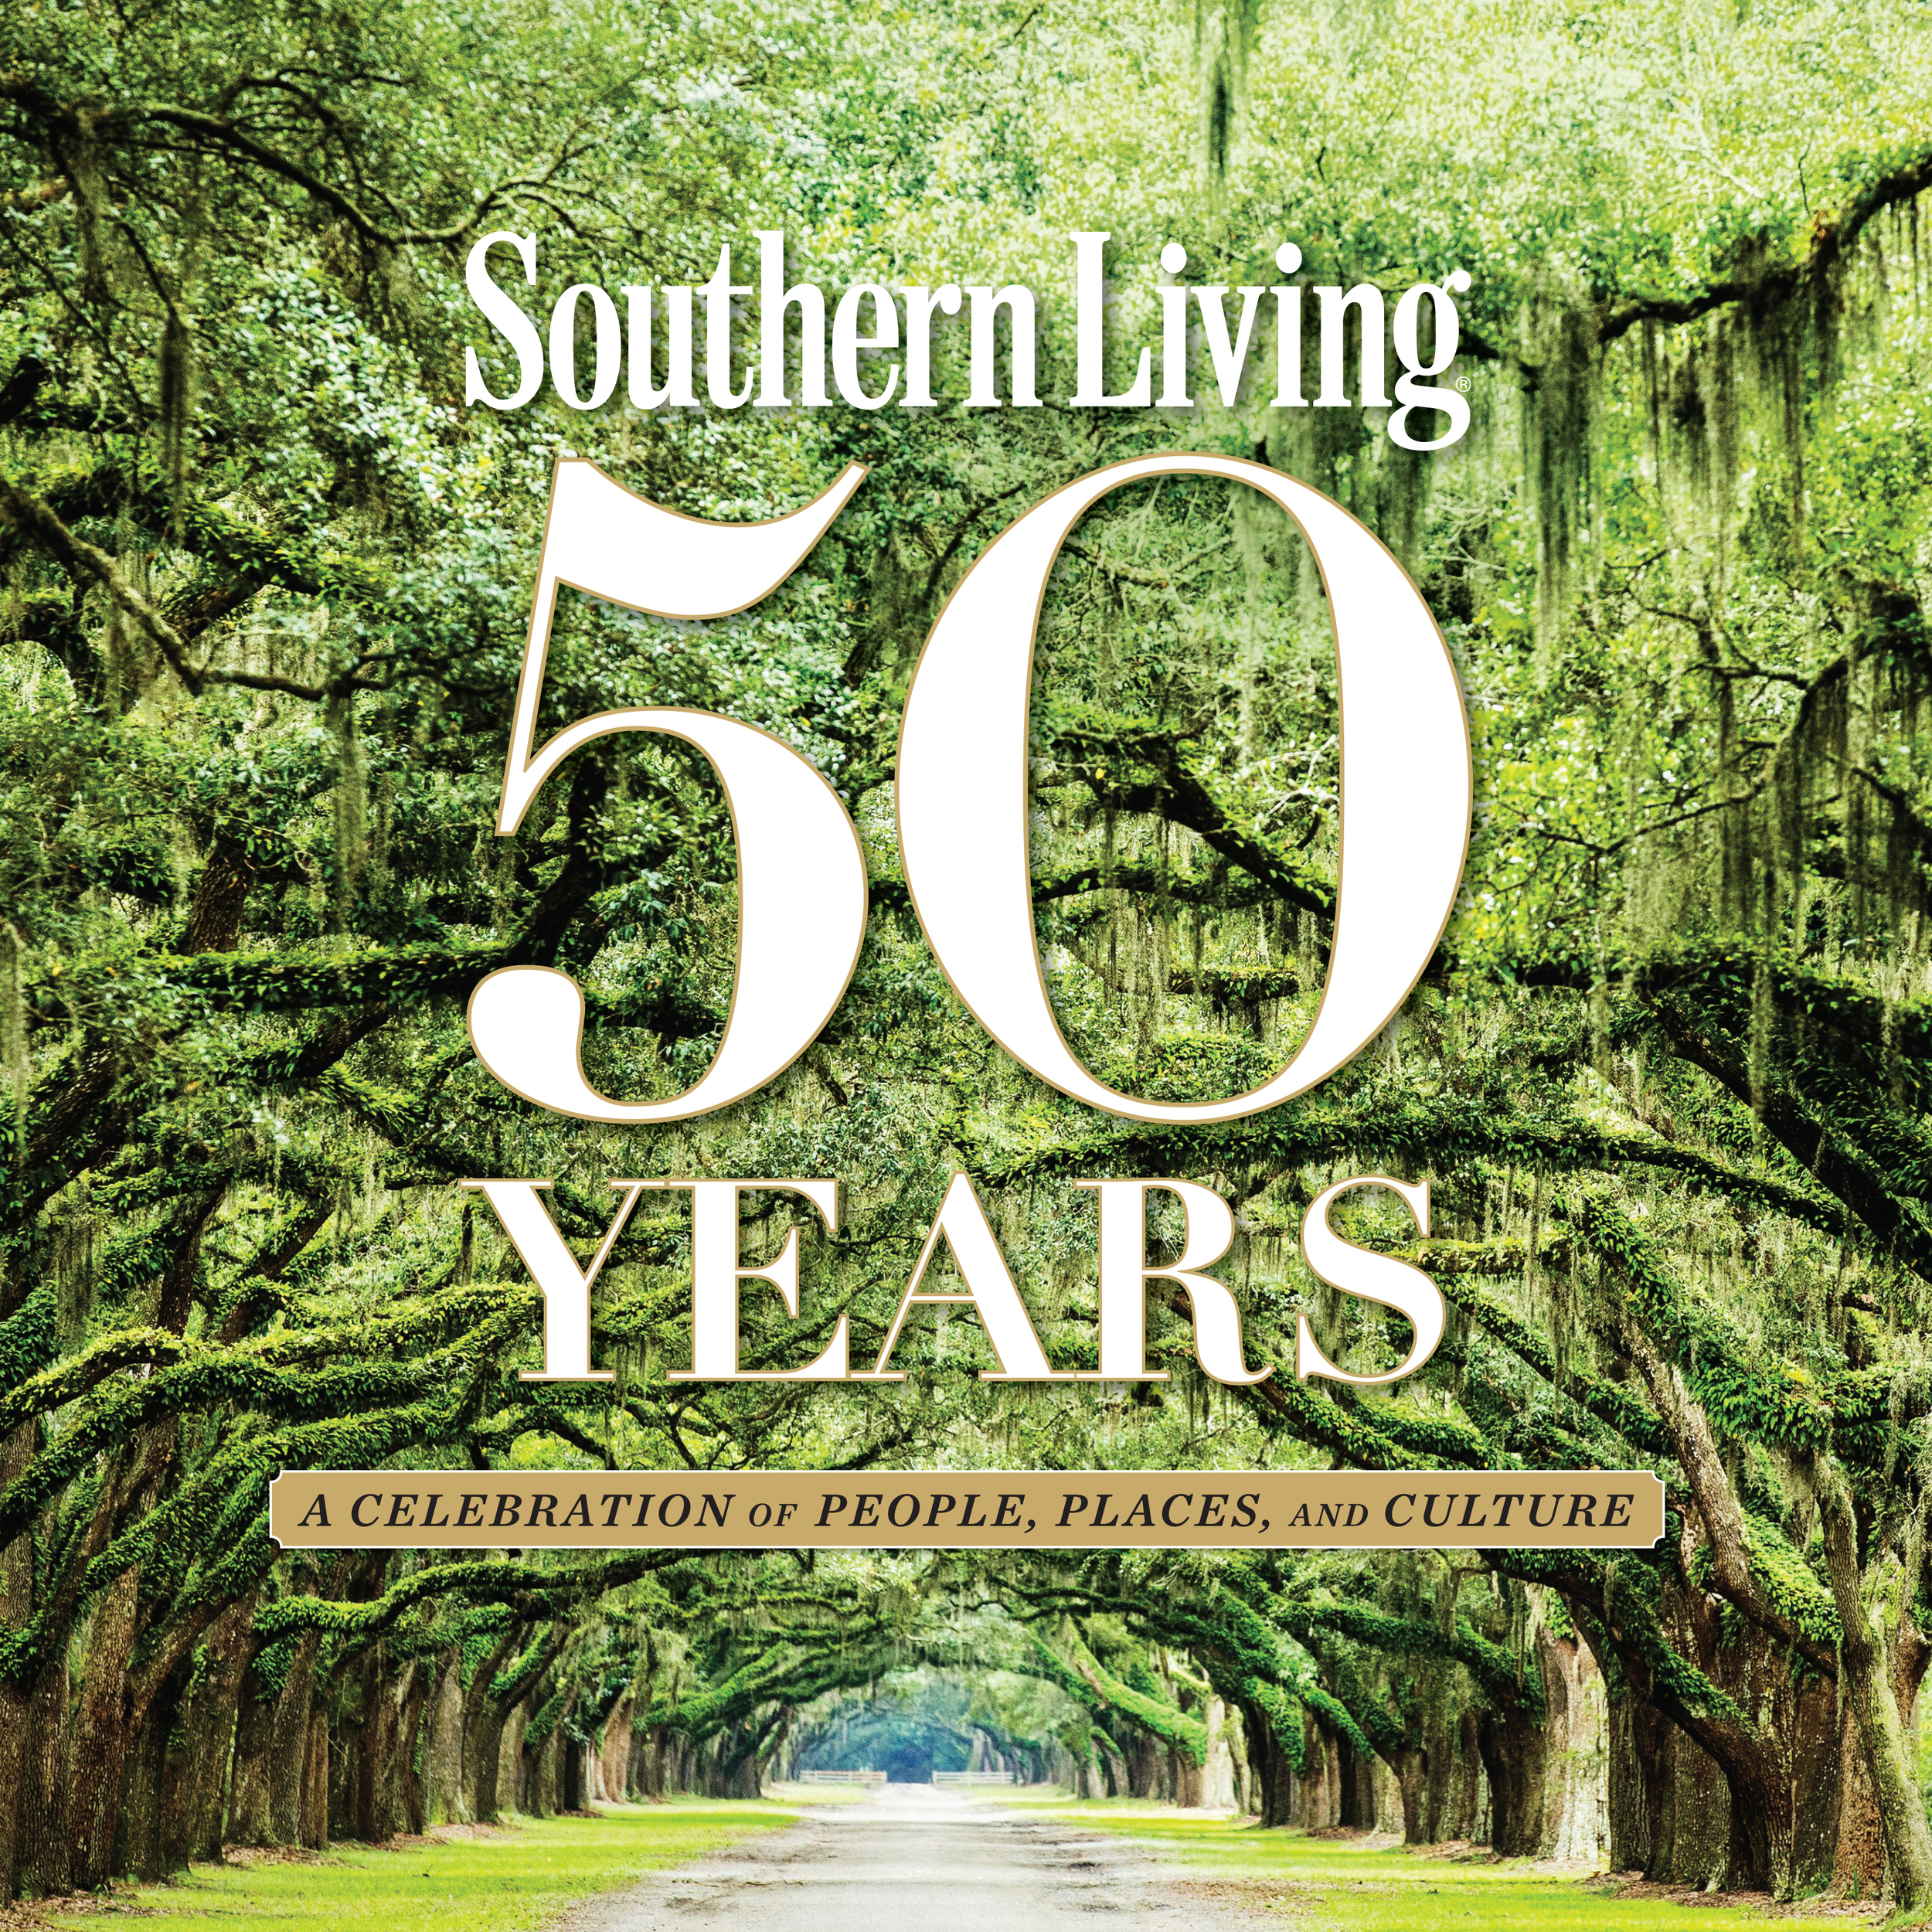 Southern Living 50 Years.jpg